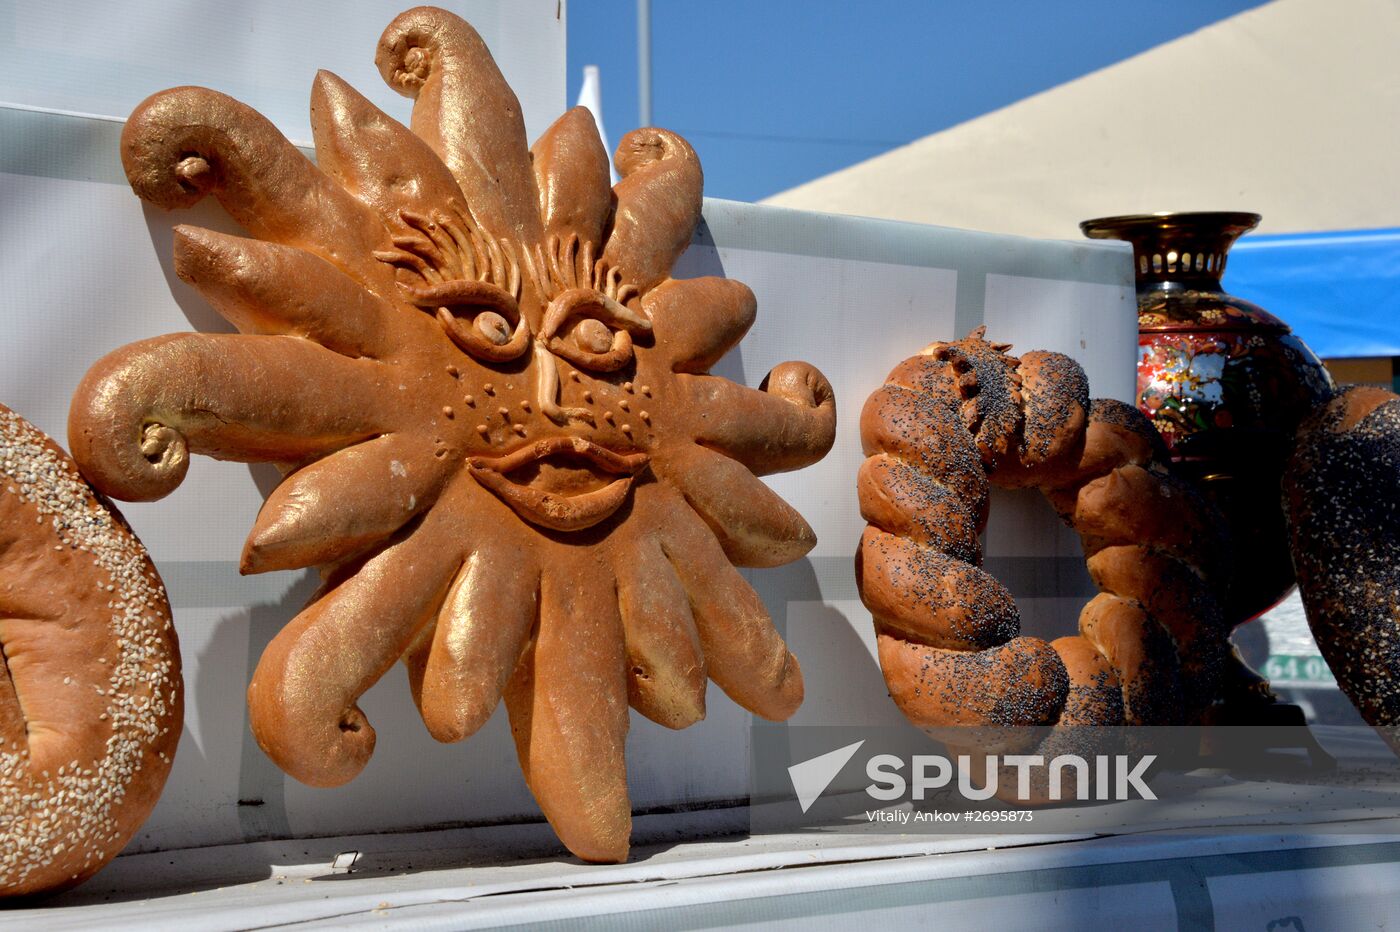 Vladivostok hosts 19th specialized Primorye Foods exhibition-fair